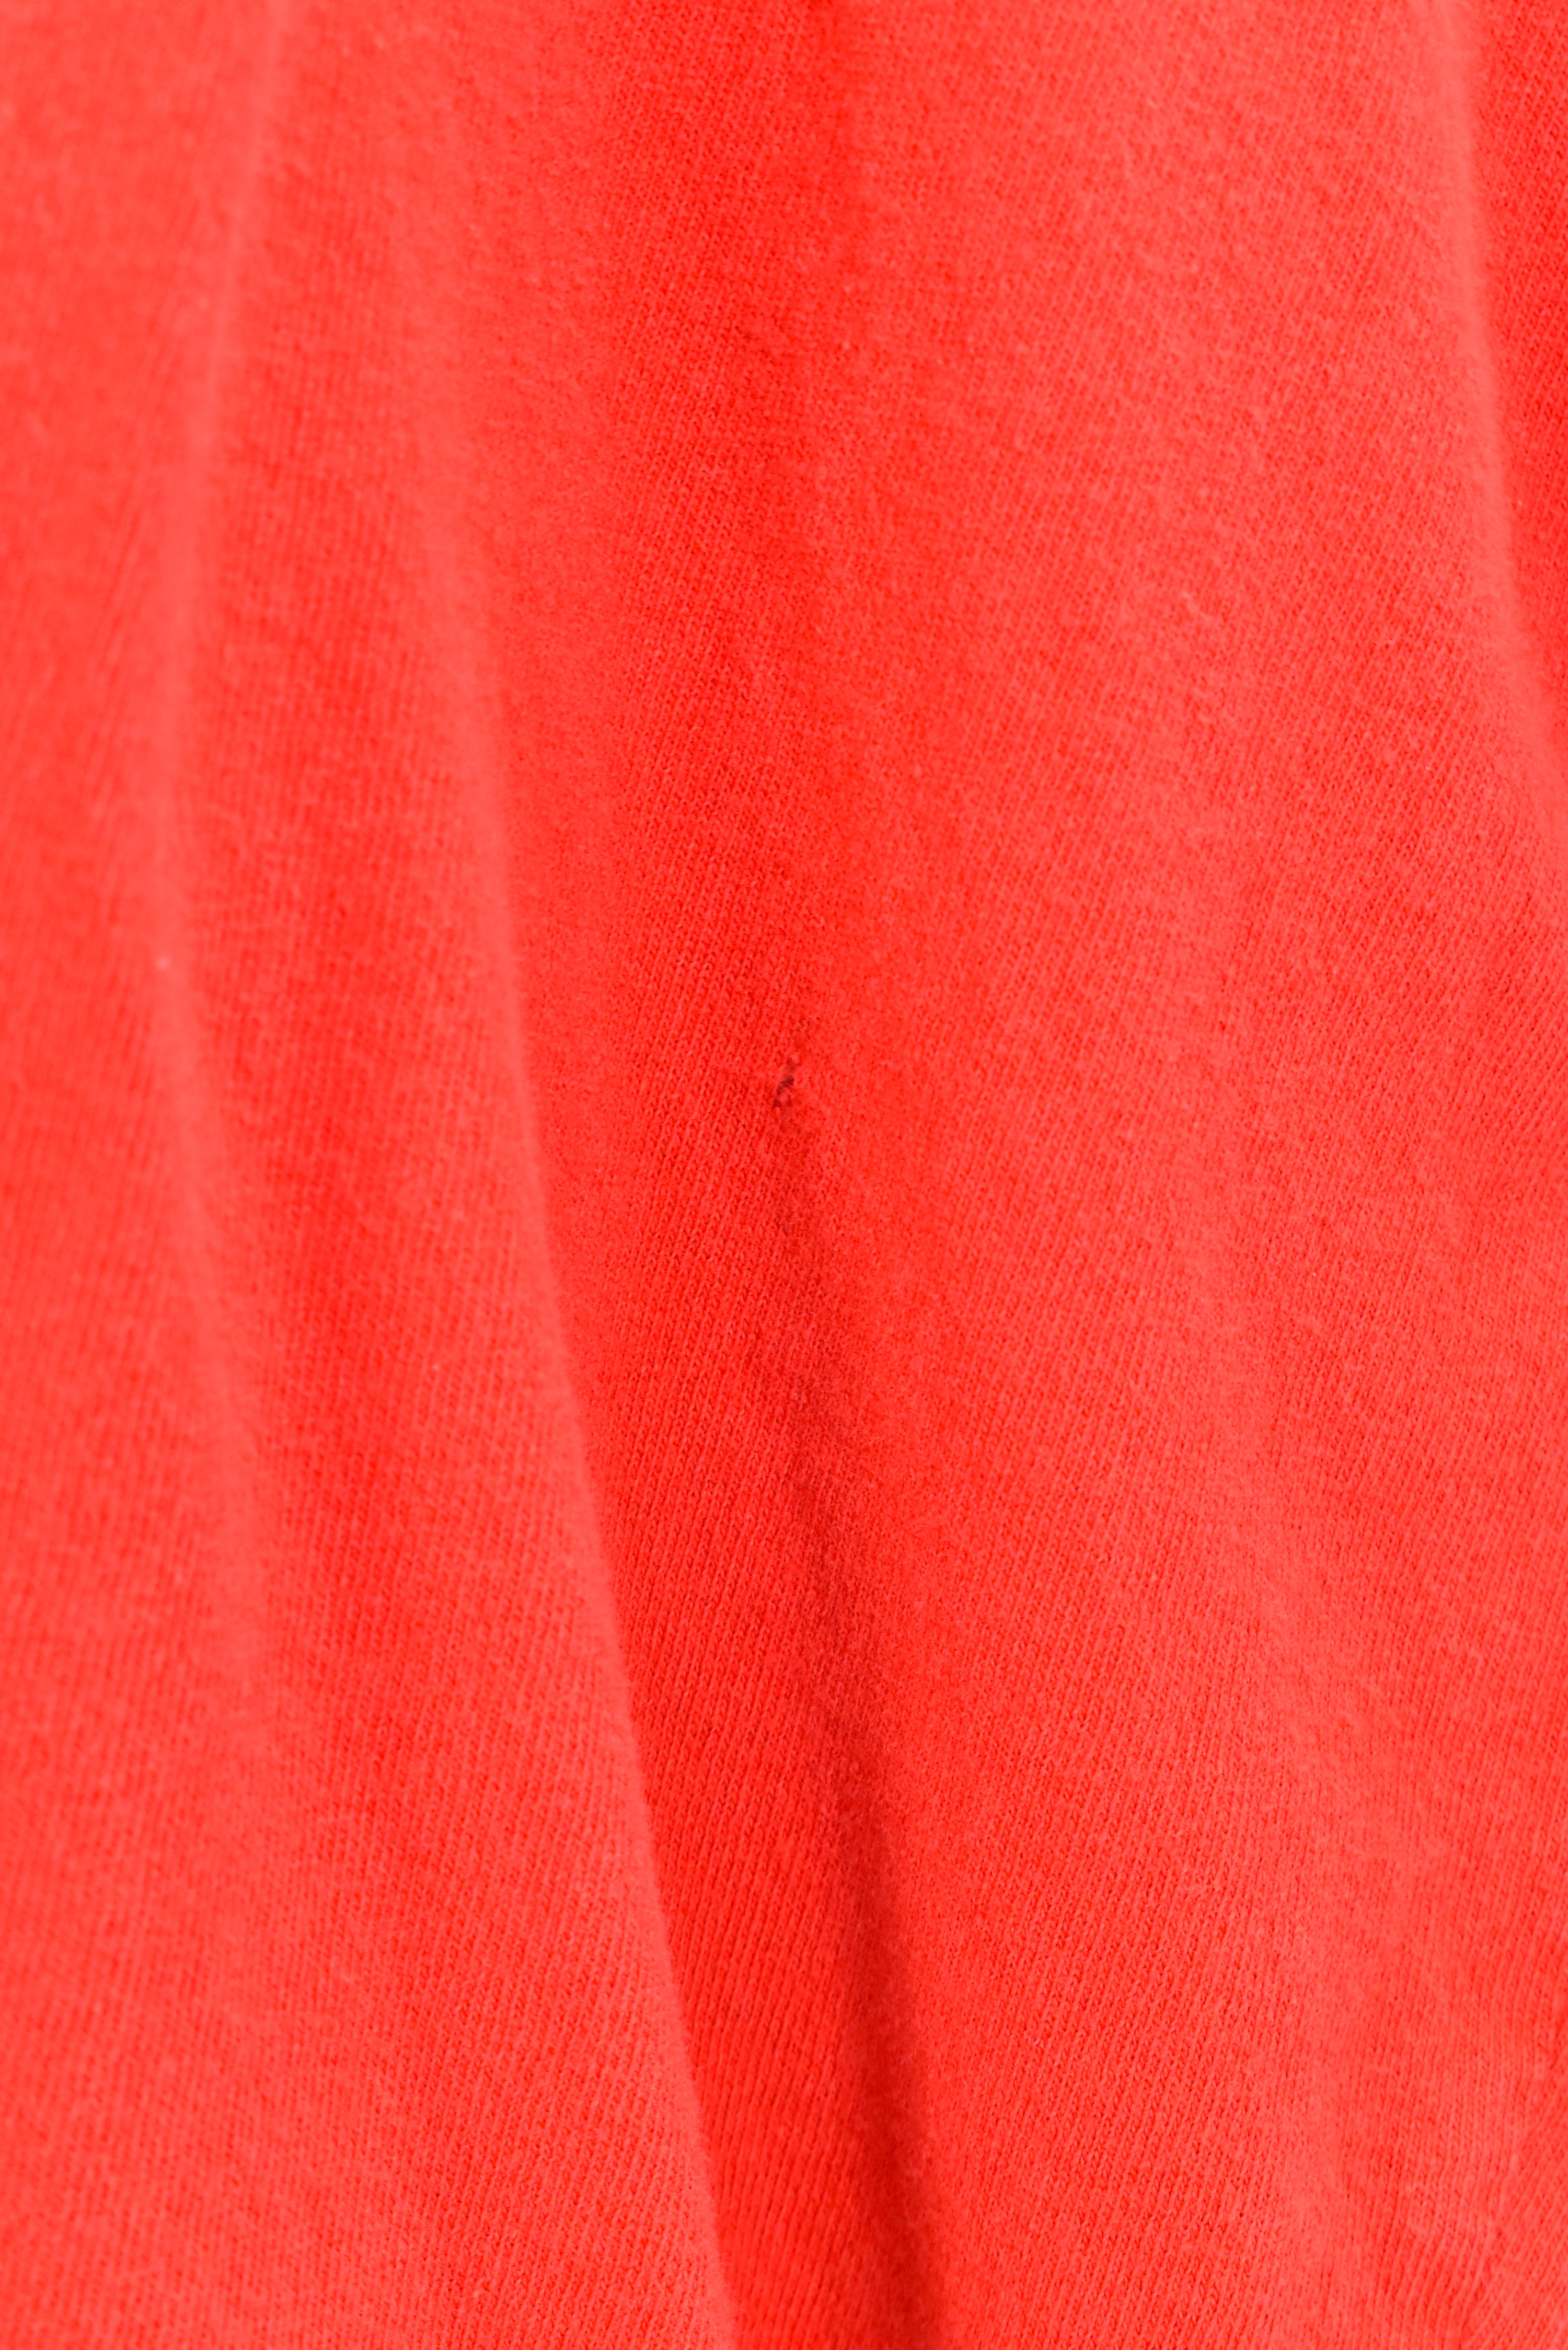 Modern Kansas City Chiefs shirt, 2019 long sleeve graphic tee - medium, red PRO SPORT